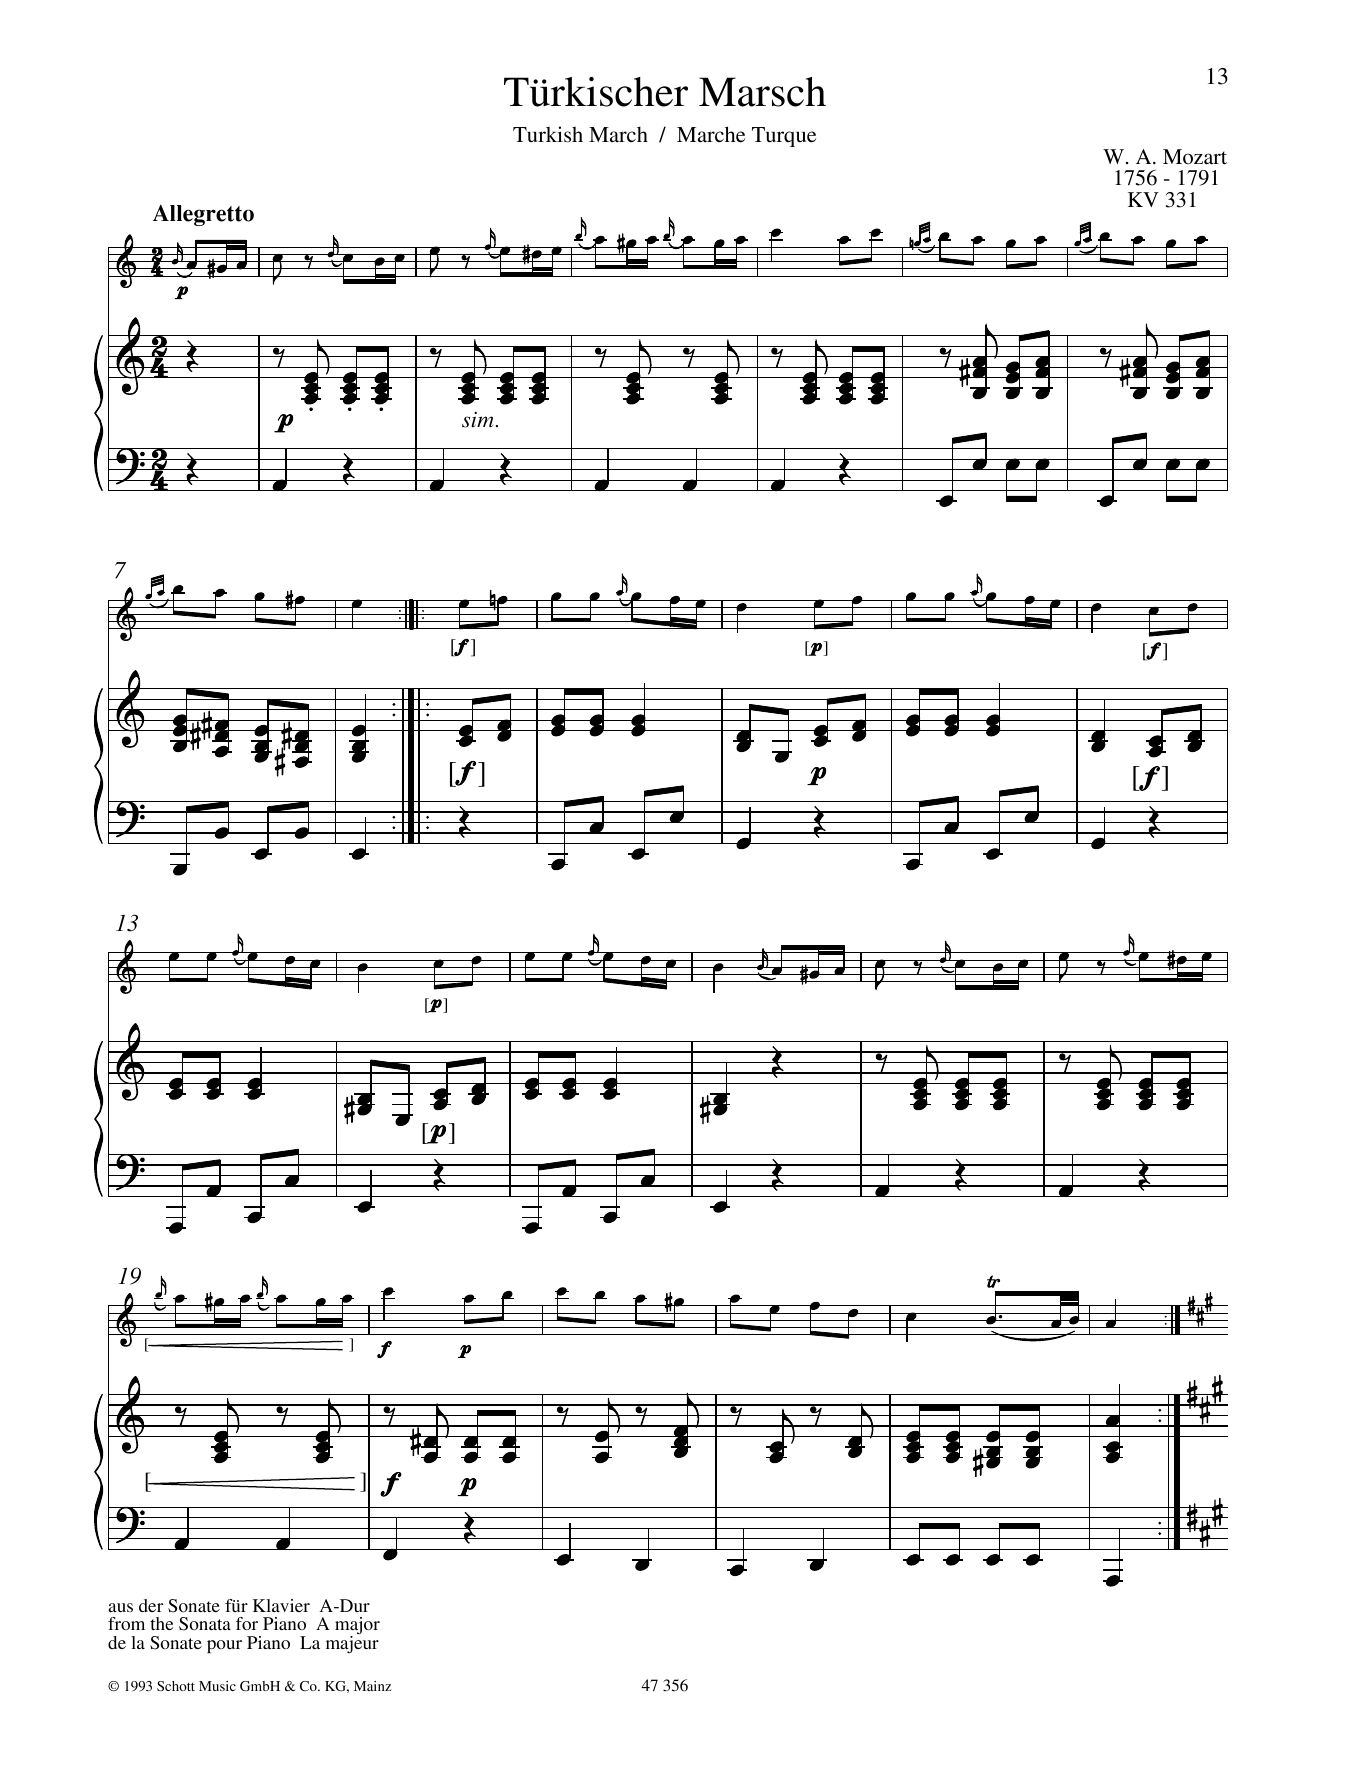 Wolfgang Amadeus Mozart Turkischer Marsch Sheet Music Notes & Chords for Woodwind Solo - Download or Print PDF